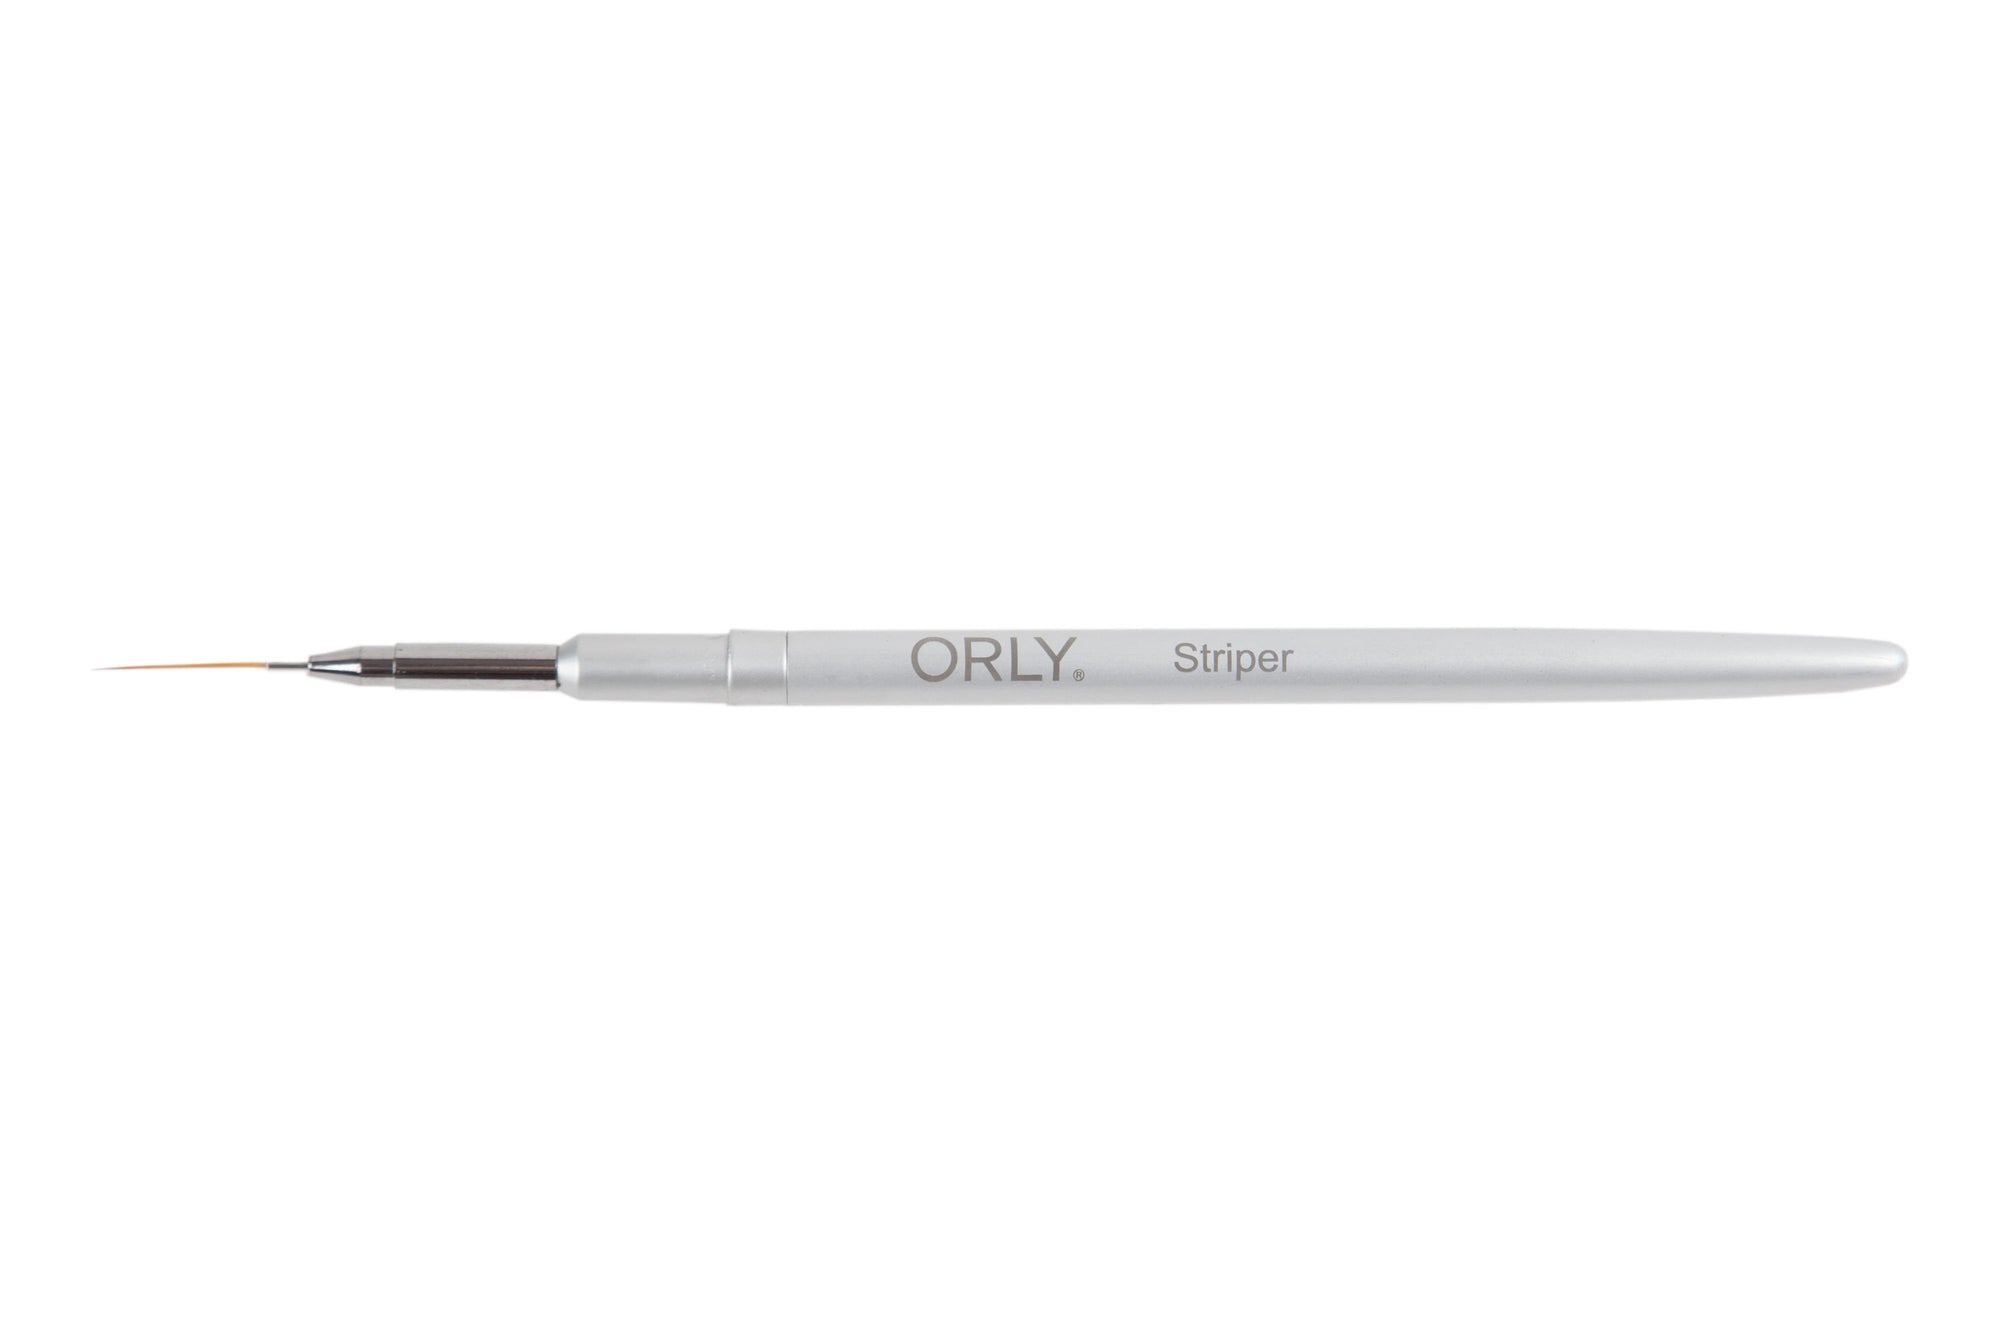 Orly FX Striper brush